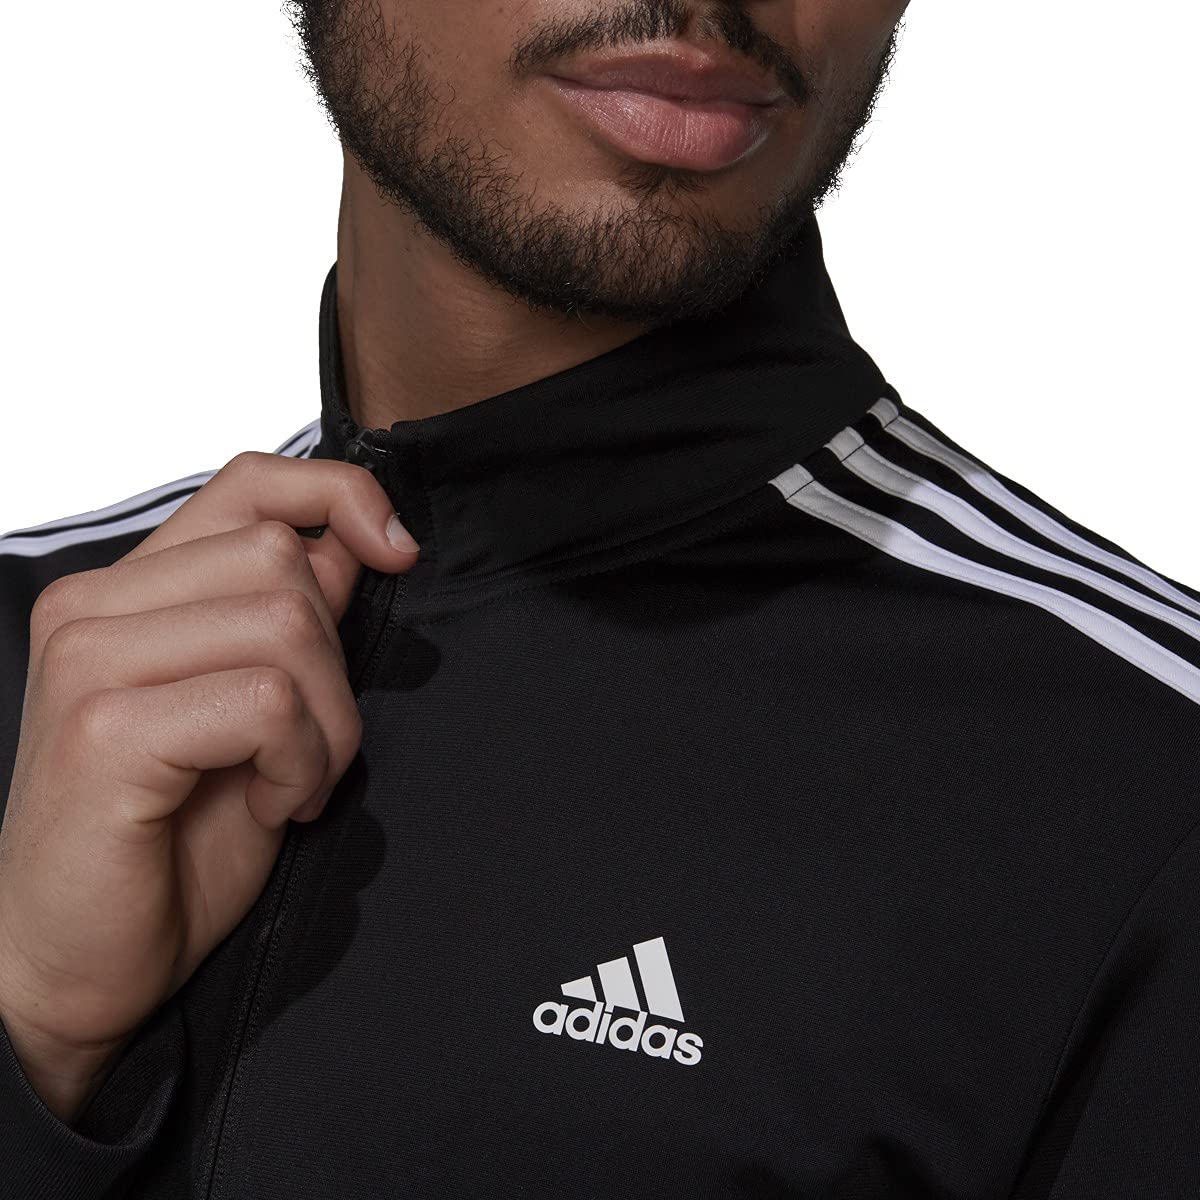 adidas Men's Essentials Warm-Up 3-Stripes Track Top, Black/White, X-Large